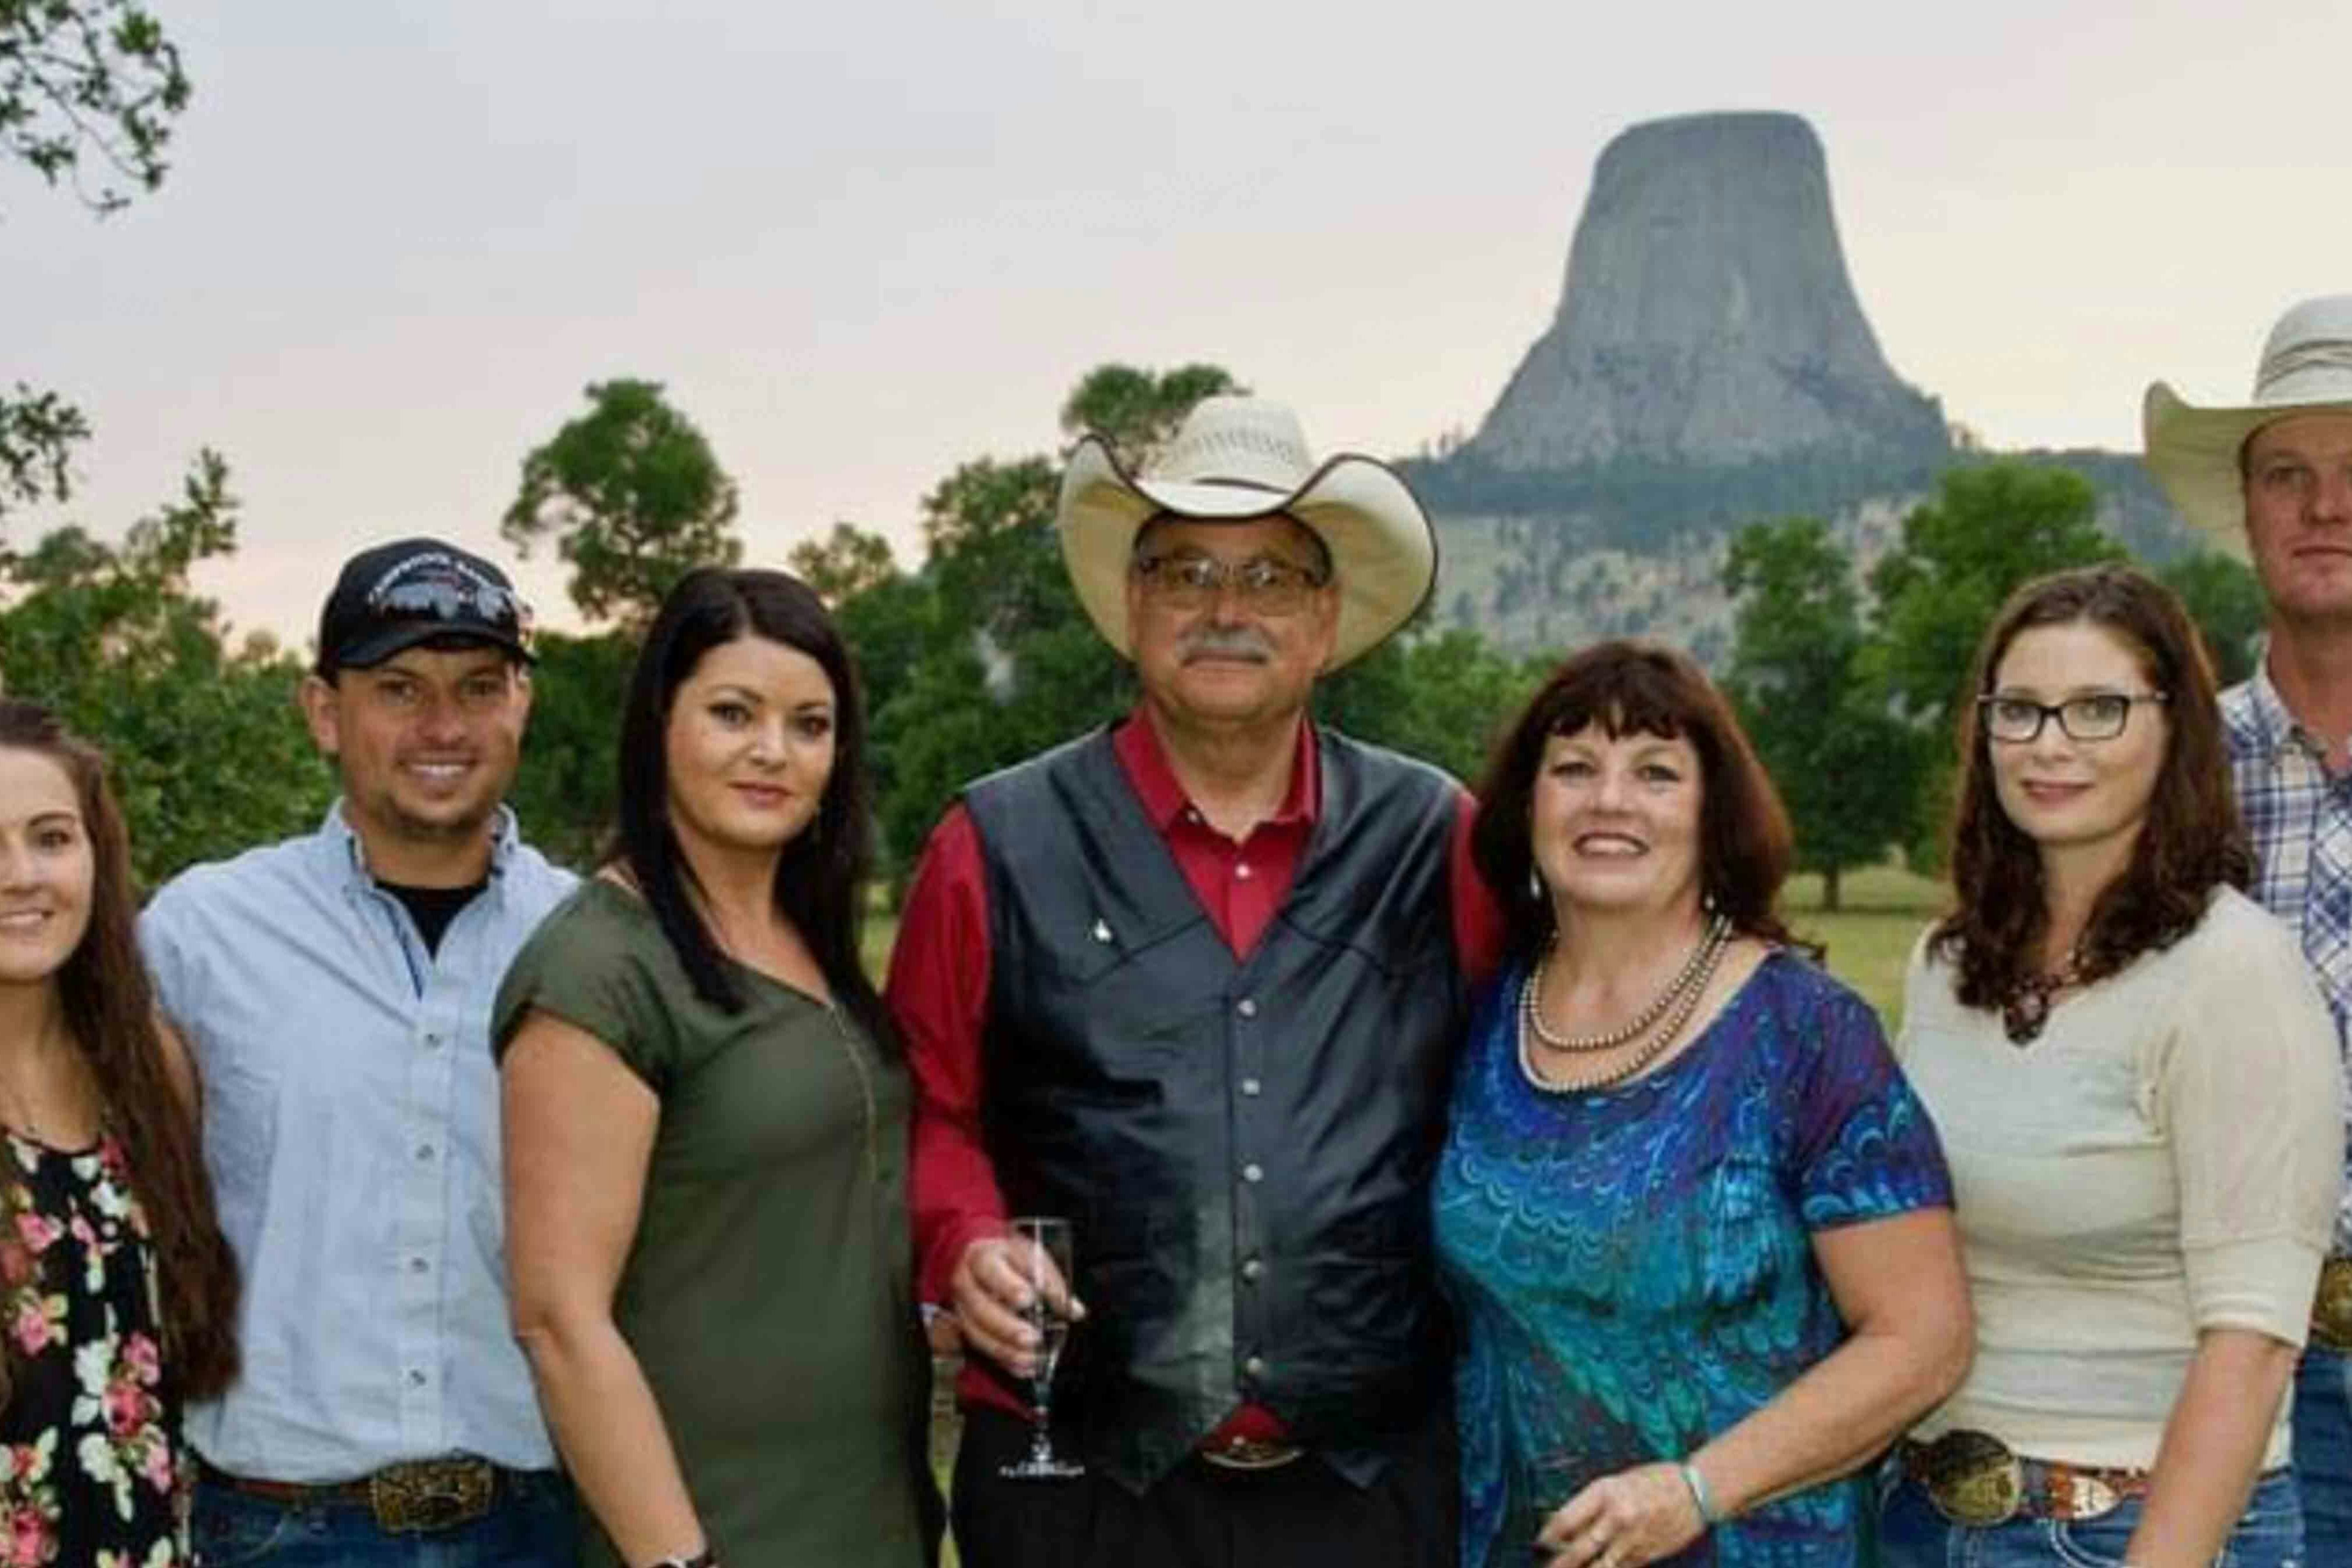 Wyoming Senate President Ogden Driskill and his family